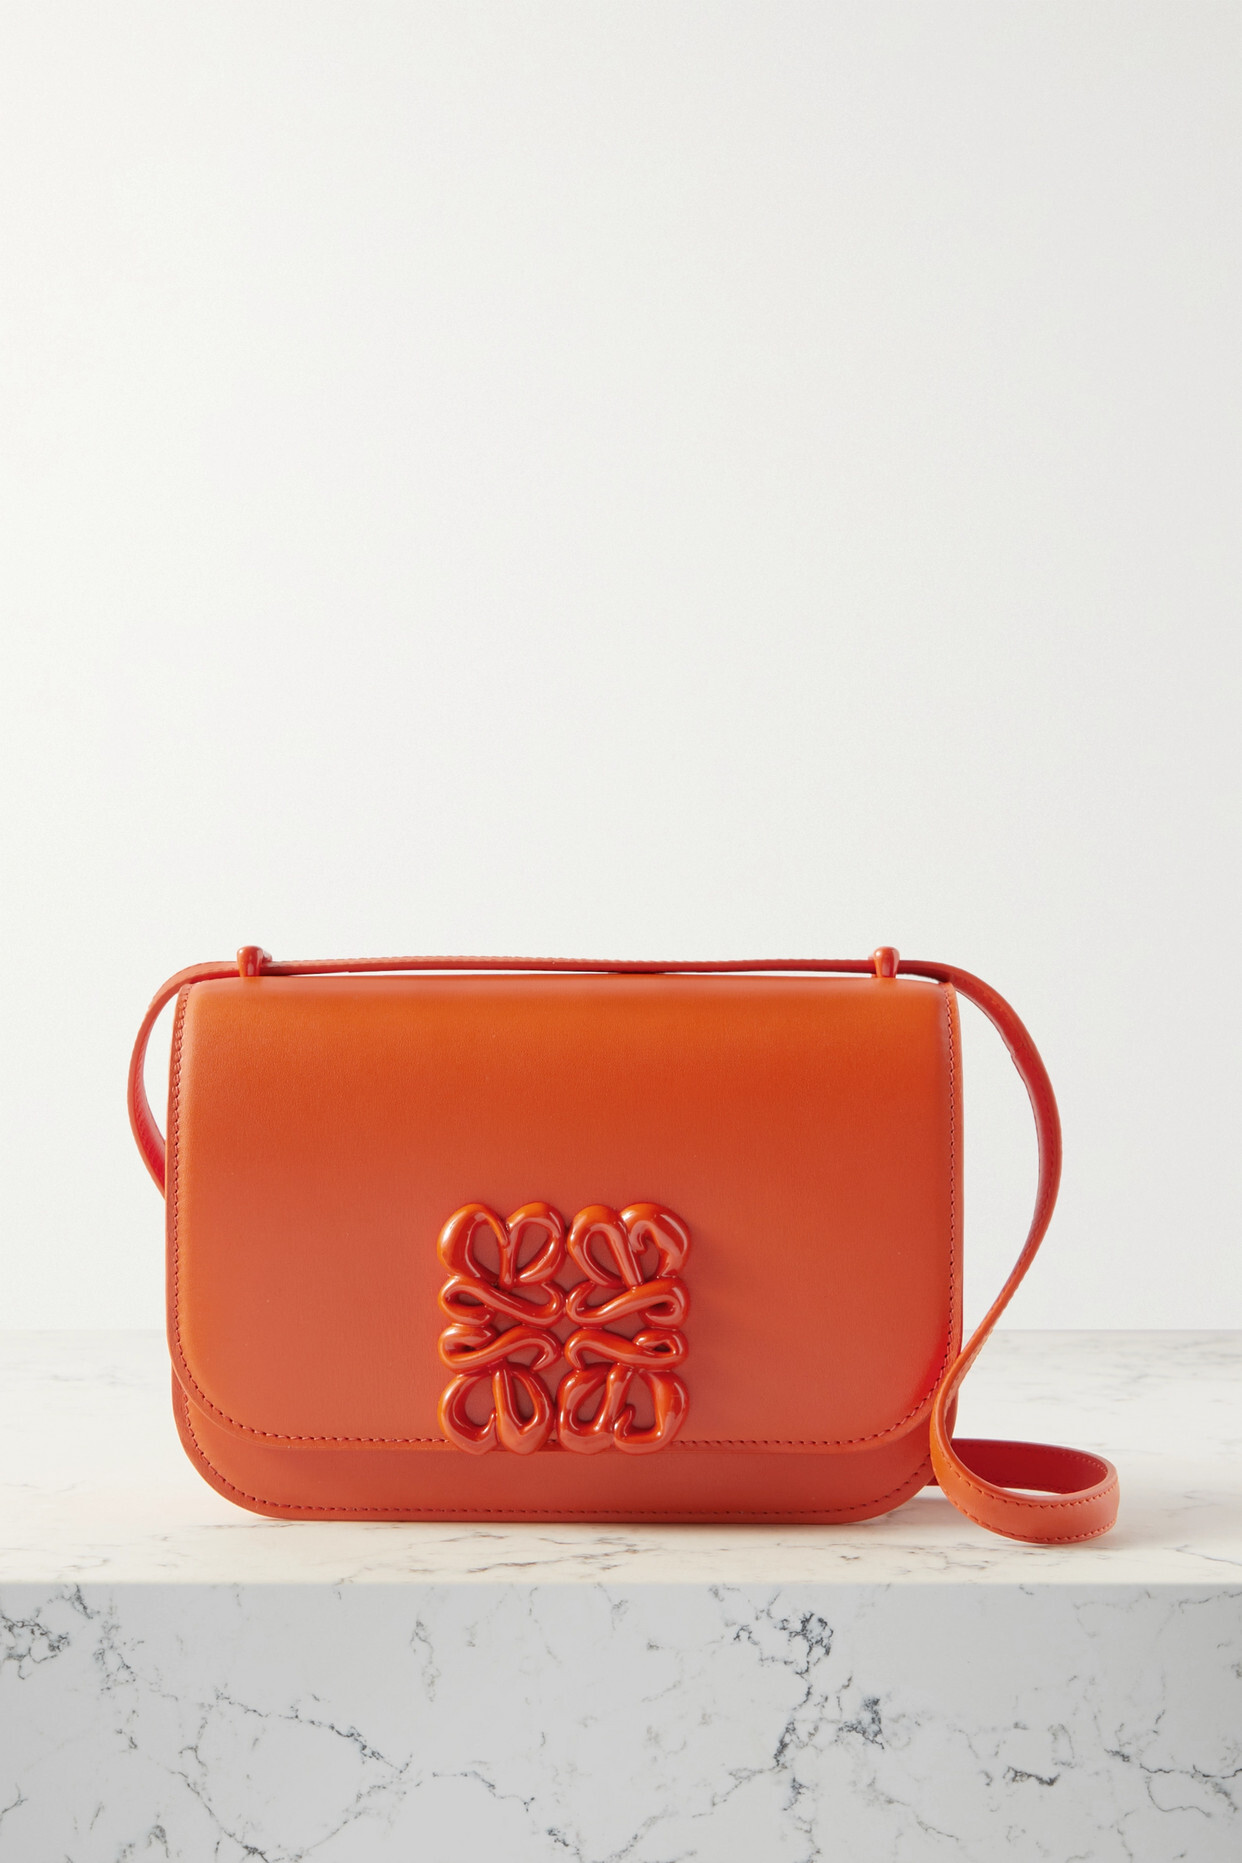 Loewe - Goya Small Leather Shoulder Bag - Orange